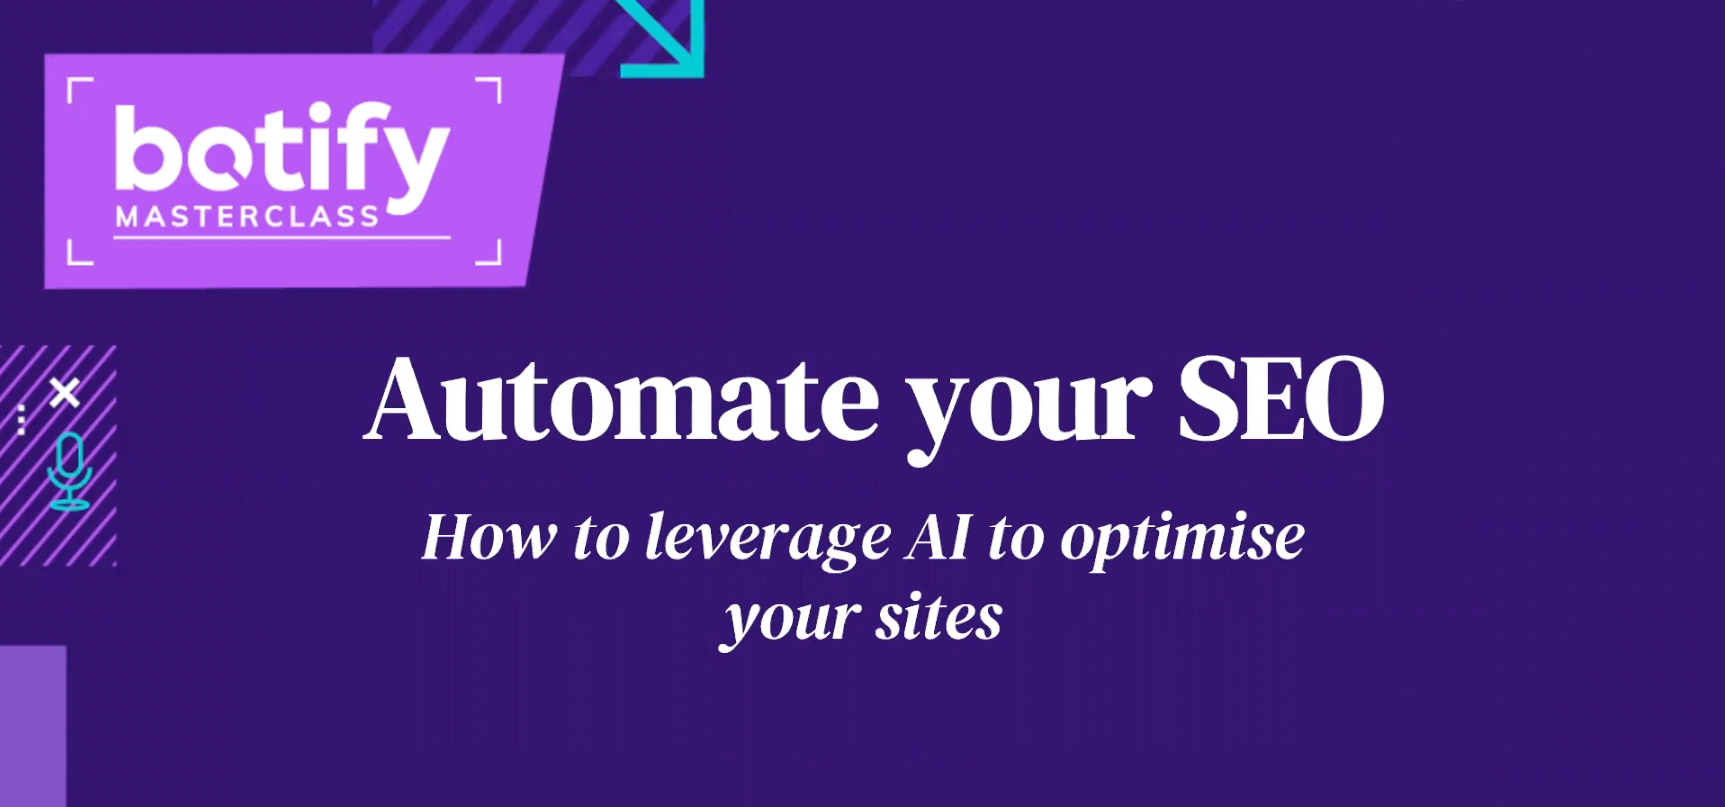 Automate your technical seo tasks with AI